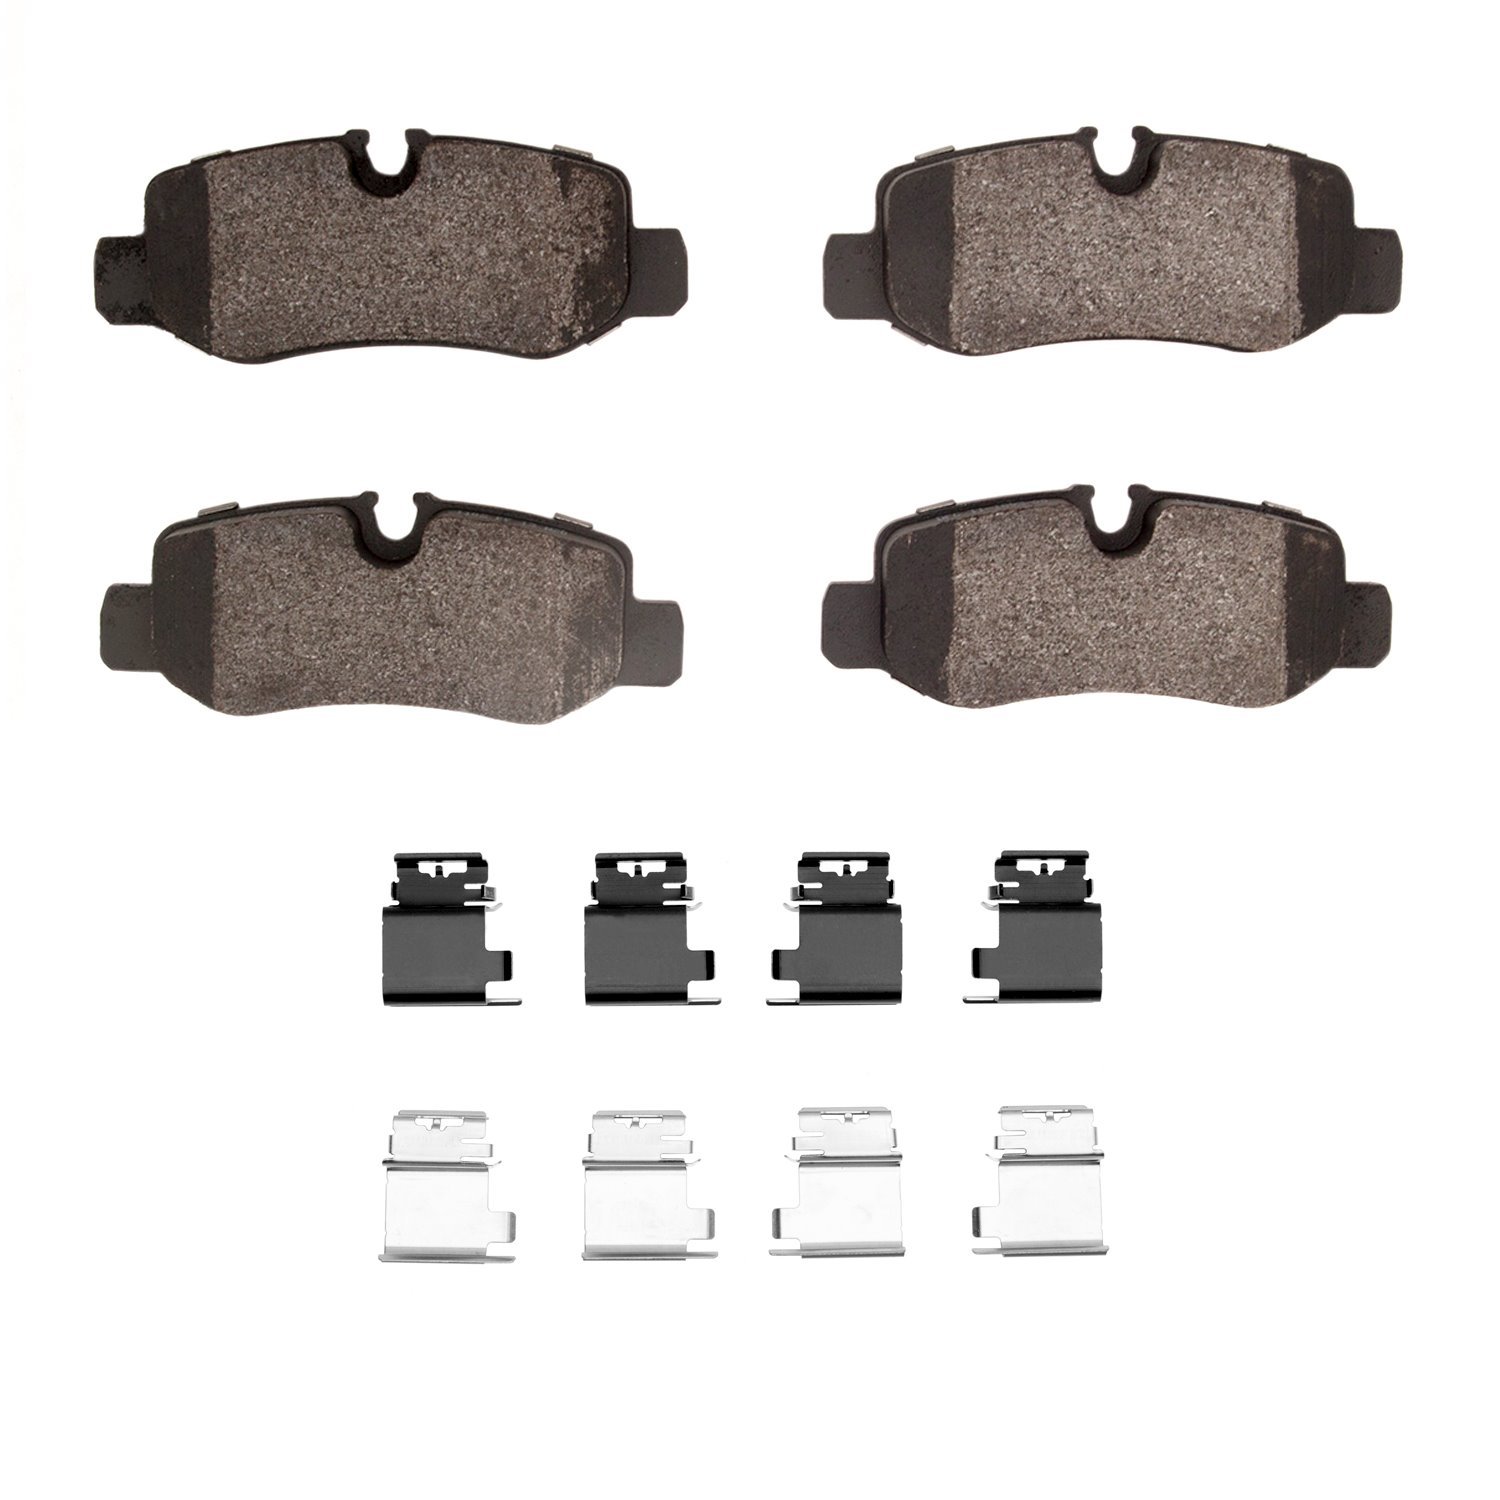 1551-1893-01 5000 Advanced Low-Metallic Brake Pads & Hardware Kit, Fits Select Mercedes-Benz, Position: Rear